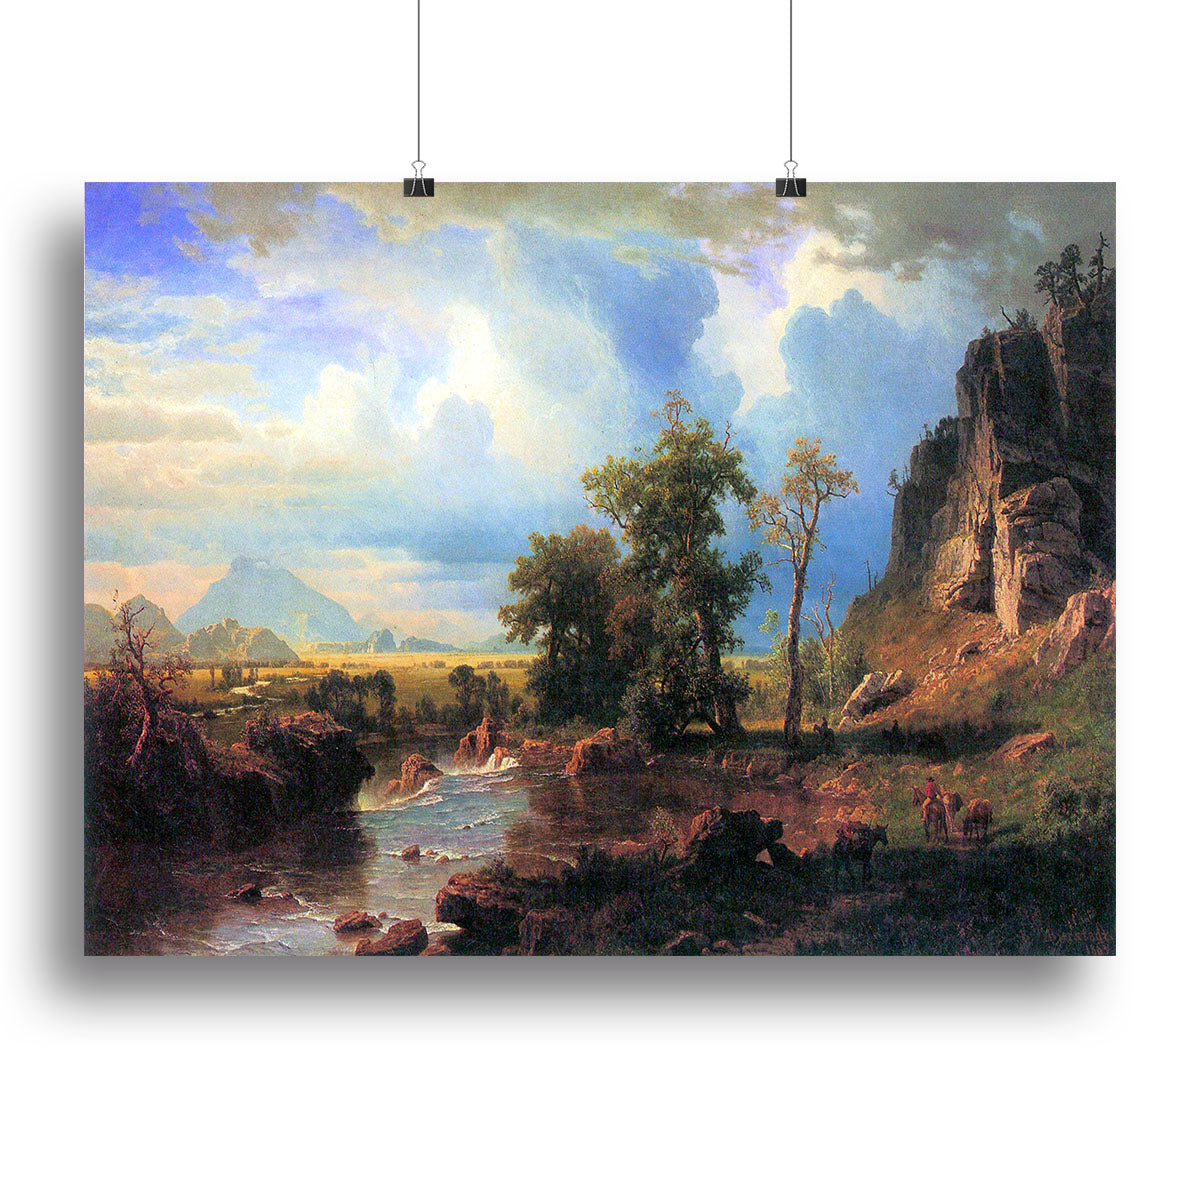 Northern fork of the Plate Nebraska by Bierstadt Canvas Print or Poster - Canvas Art Rocks - 2